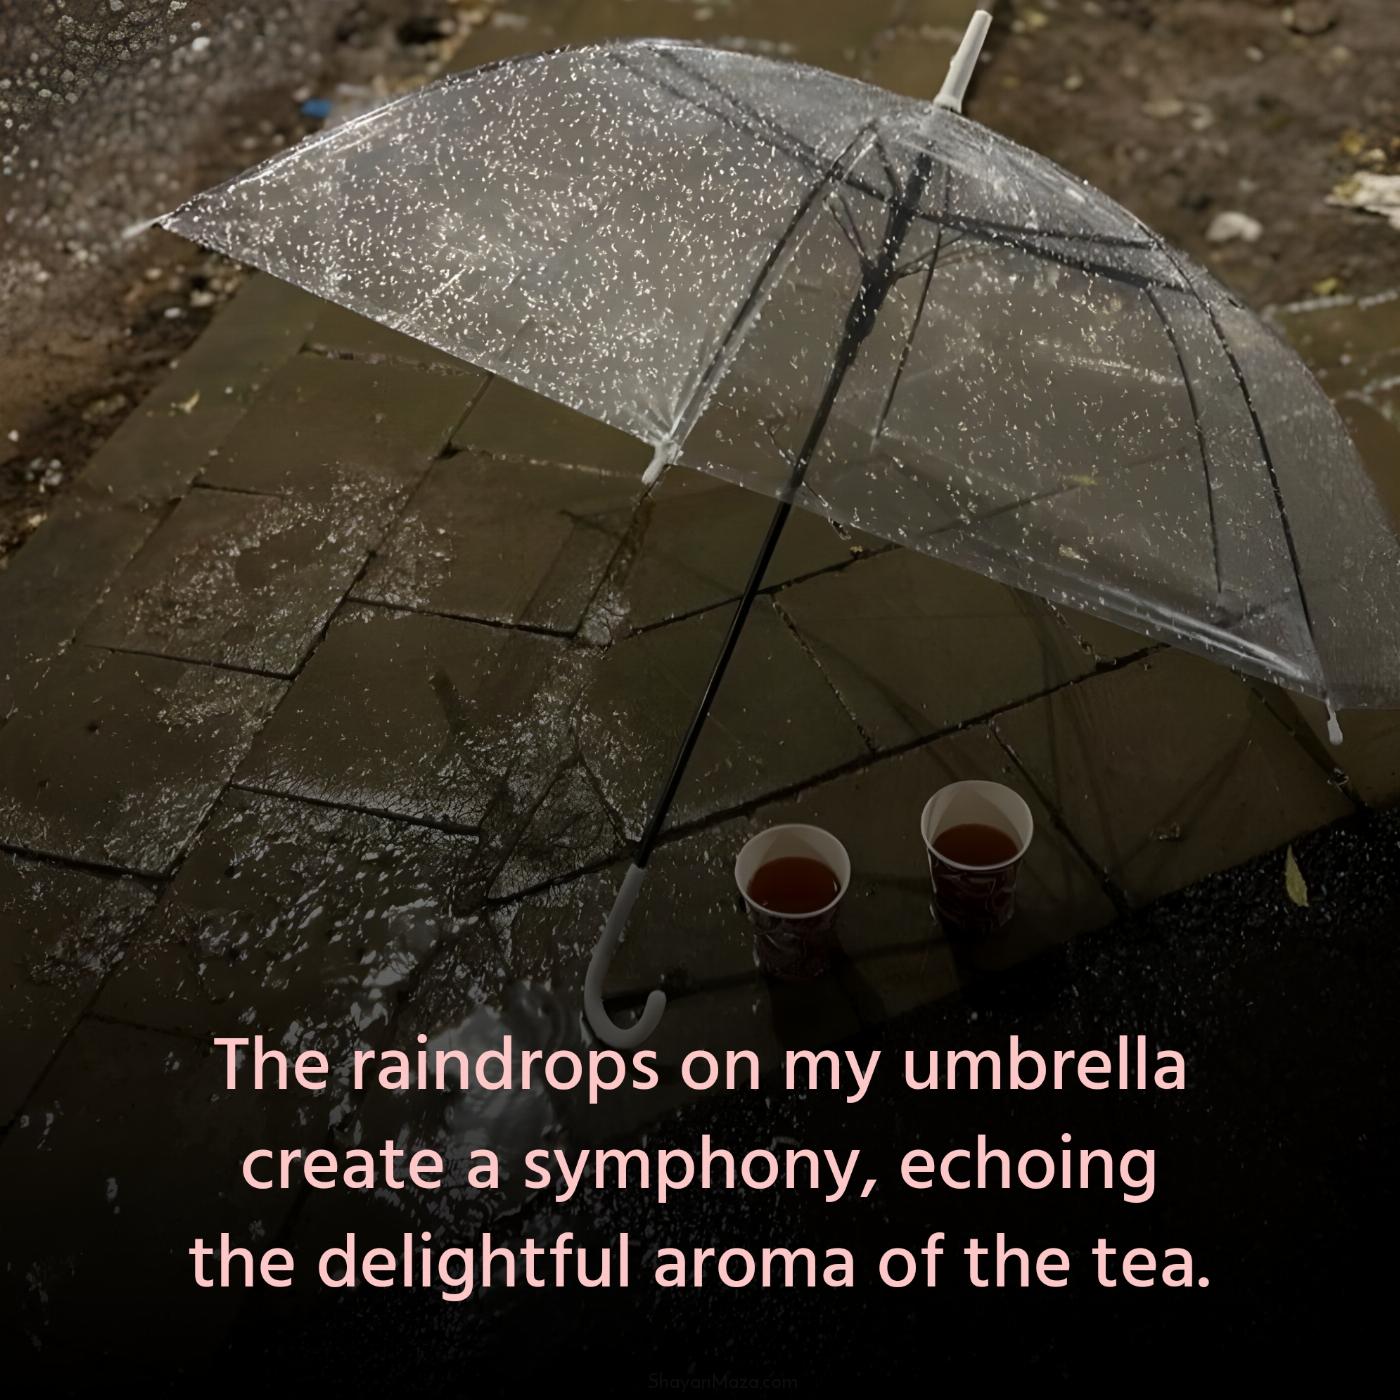 The raindrops on my umbrella create a symphony